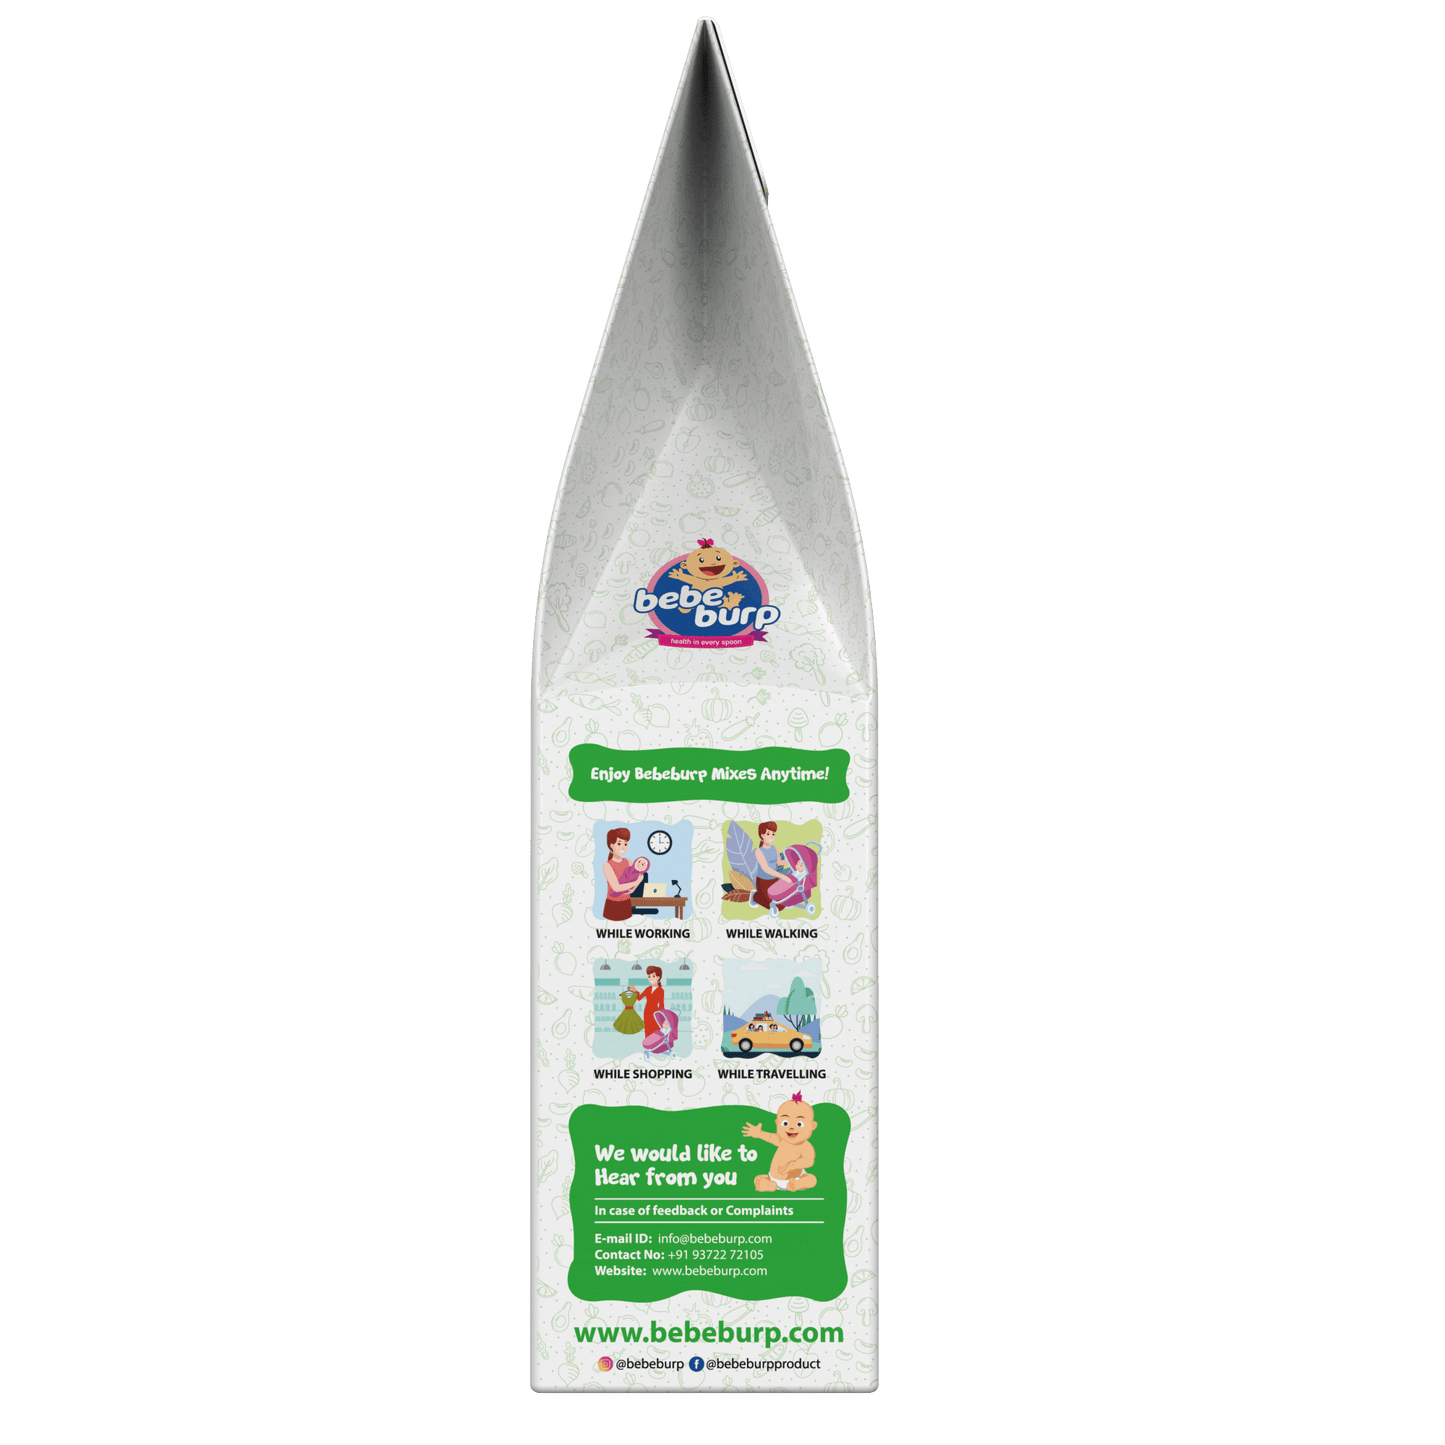 
                  
                    Bebe Burp Organic Baby Food Instant Khichdi Mix Porridge with Spinach & Carrot (200g)
                  
                